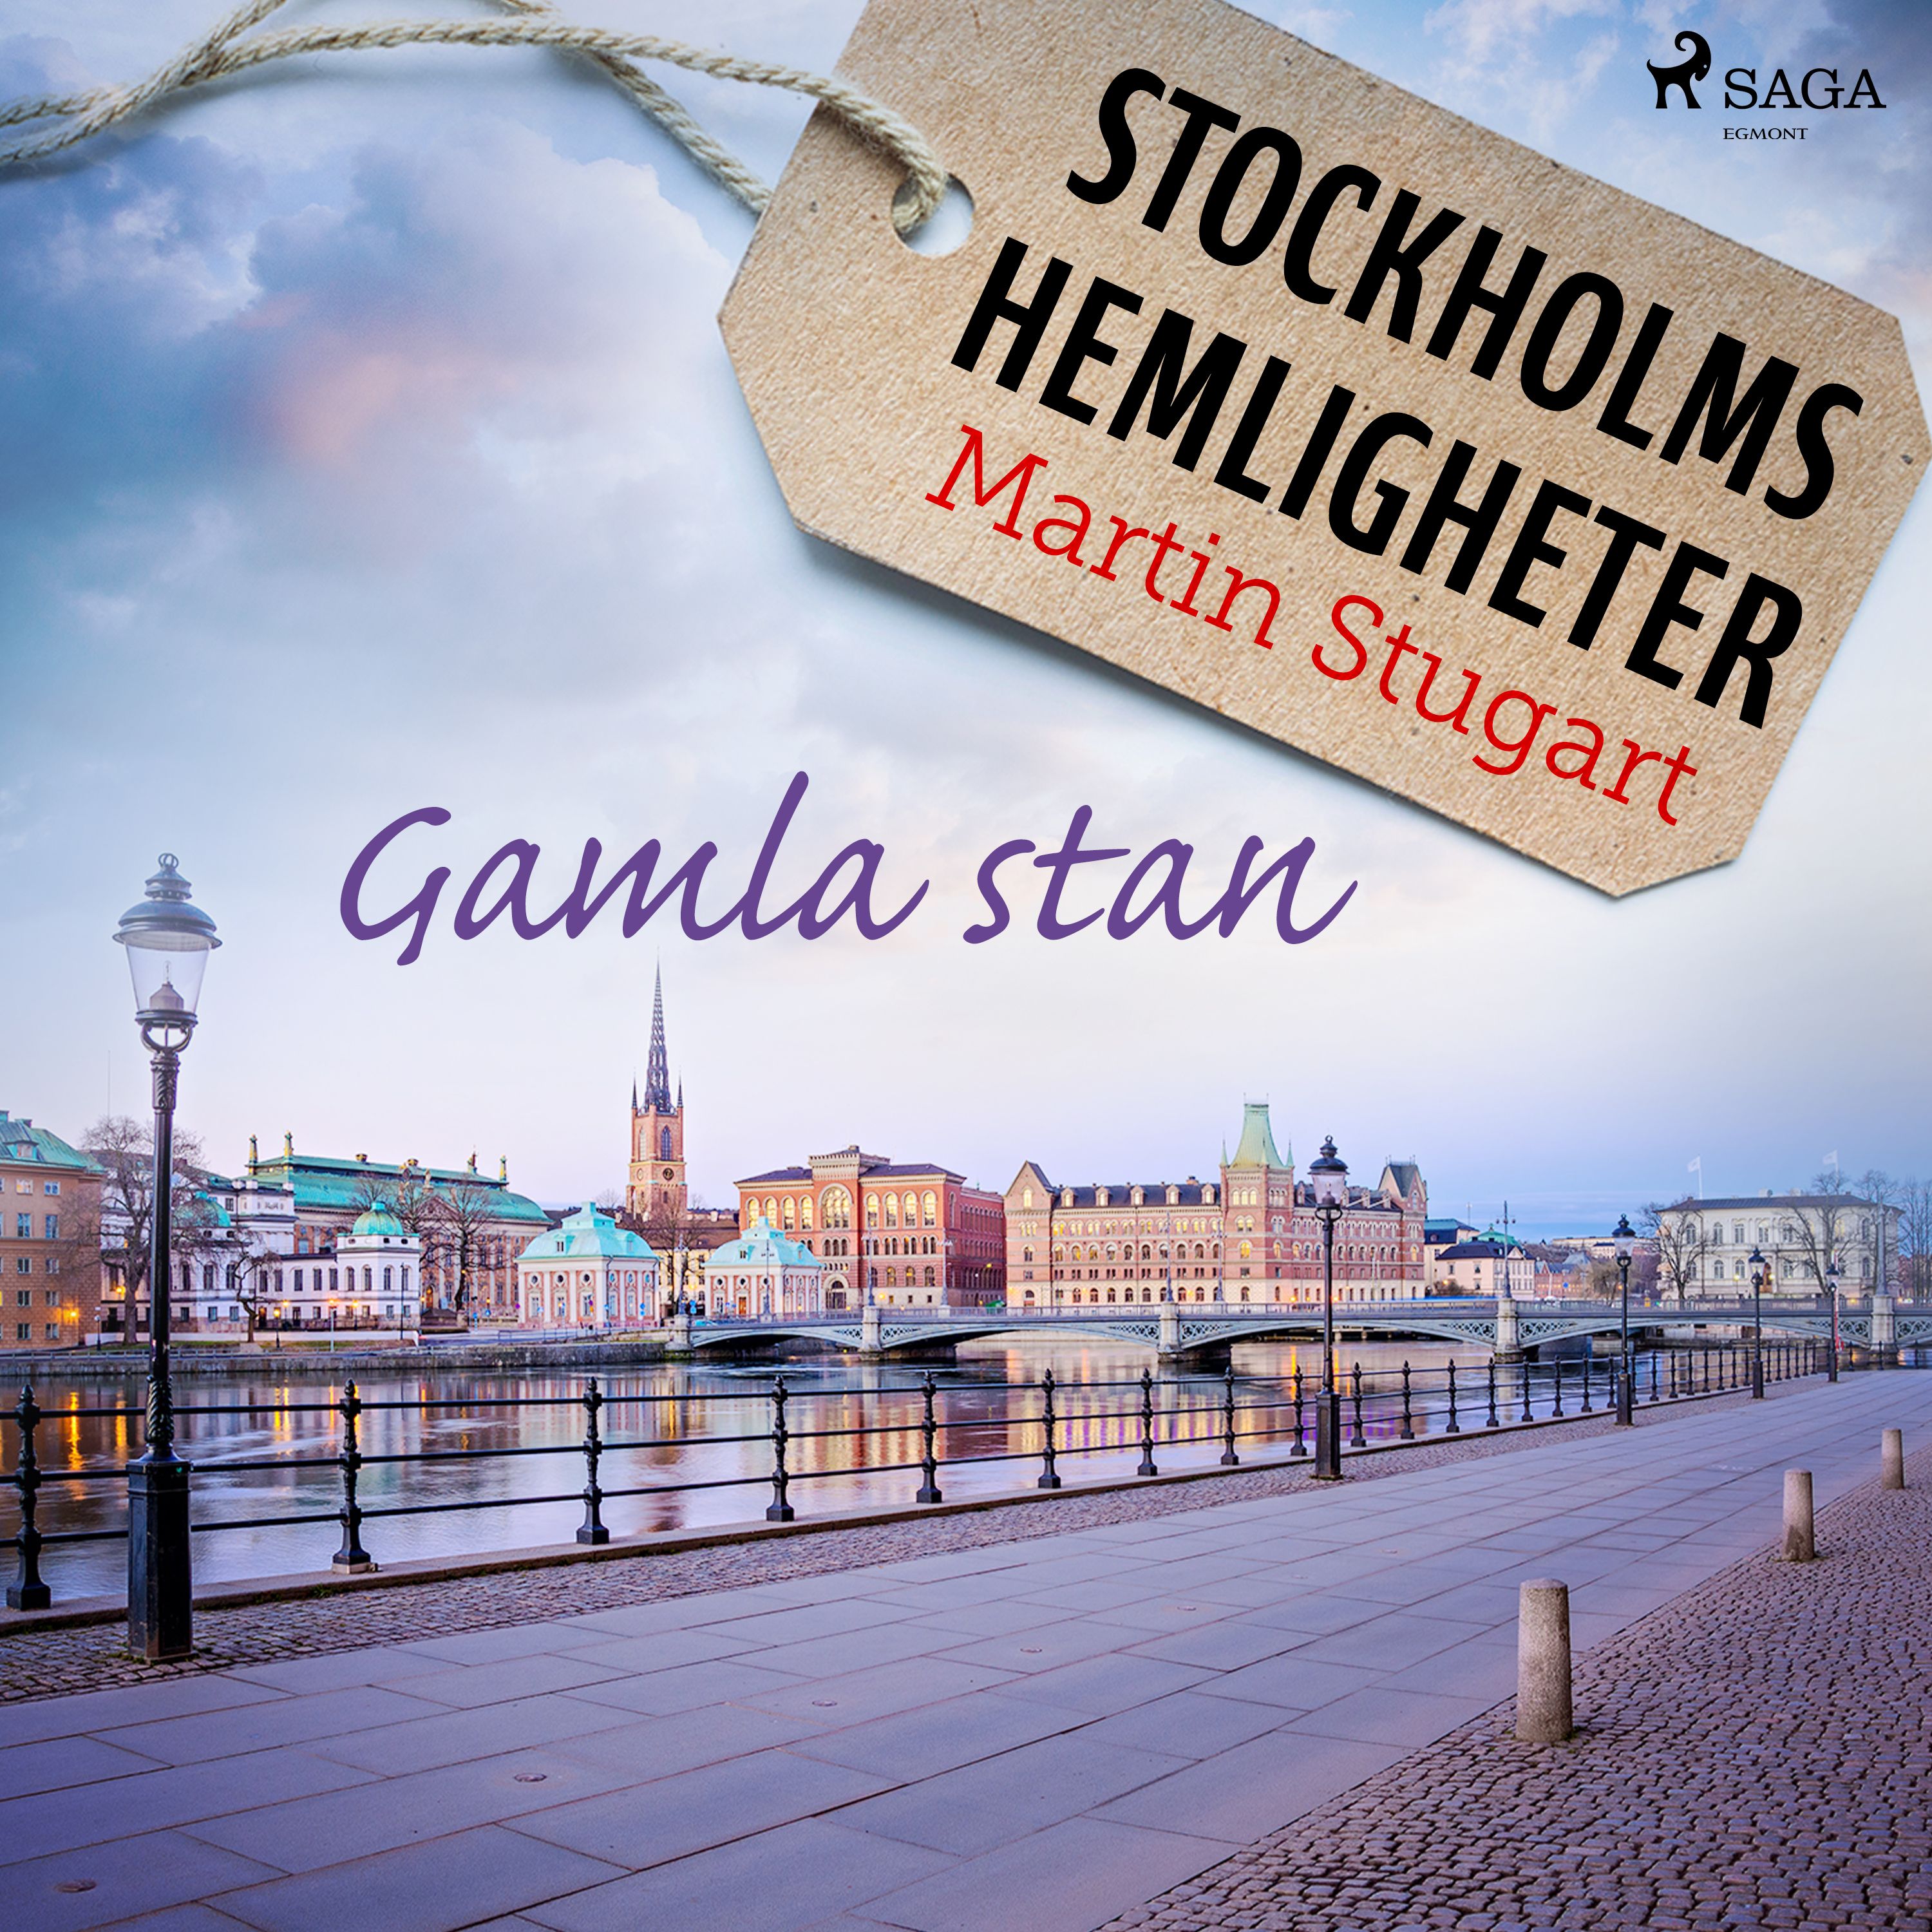 Stockholms hemligheter: Gamla stan, lydbog af Martin Stugart